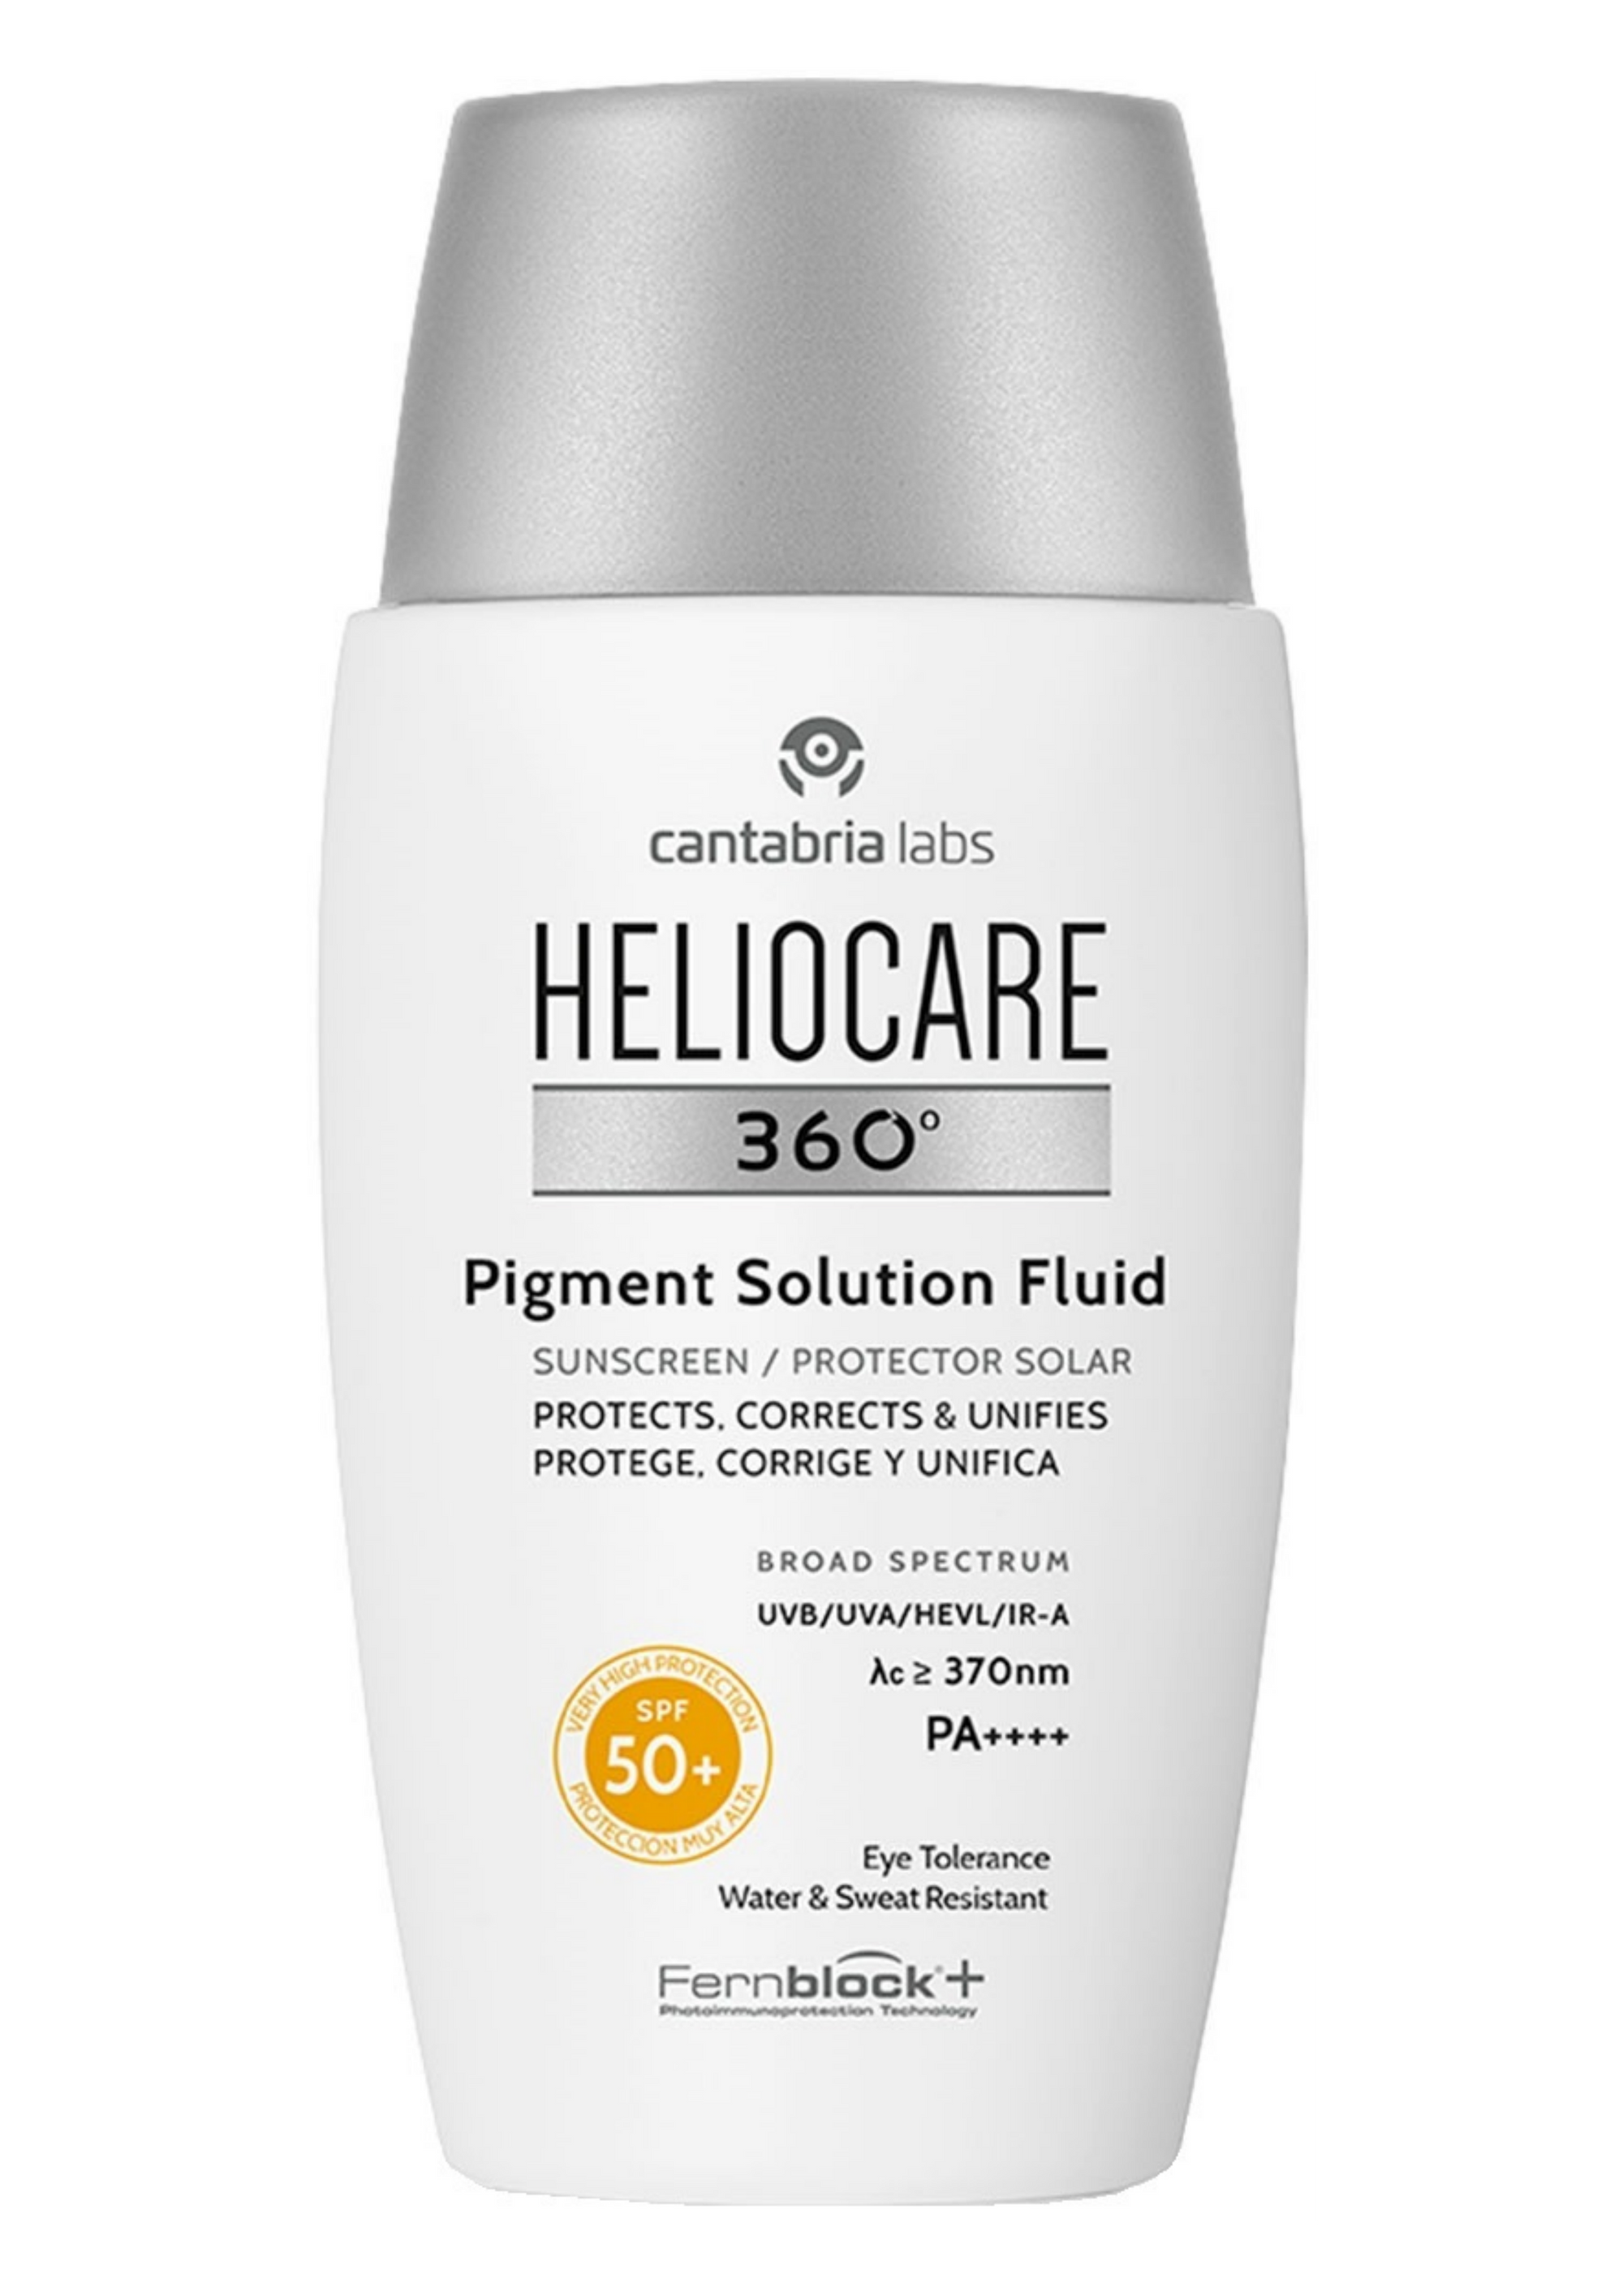 Heliocare® 360° Pigment Solution Fluid SPF 50+